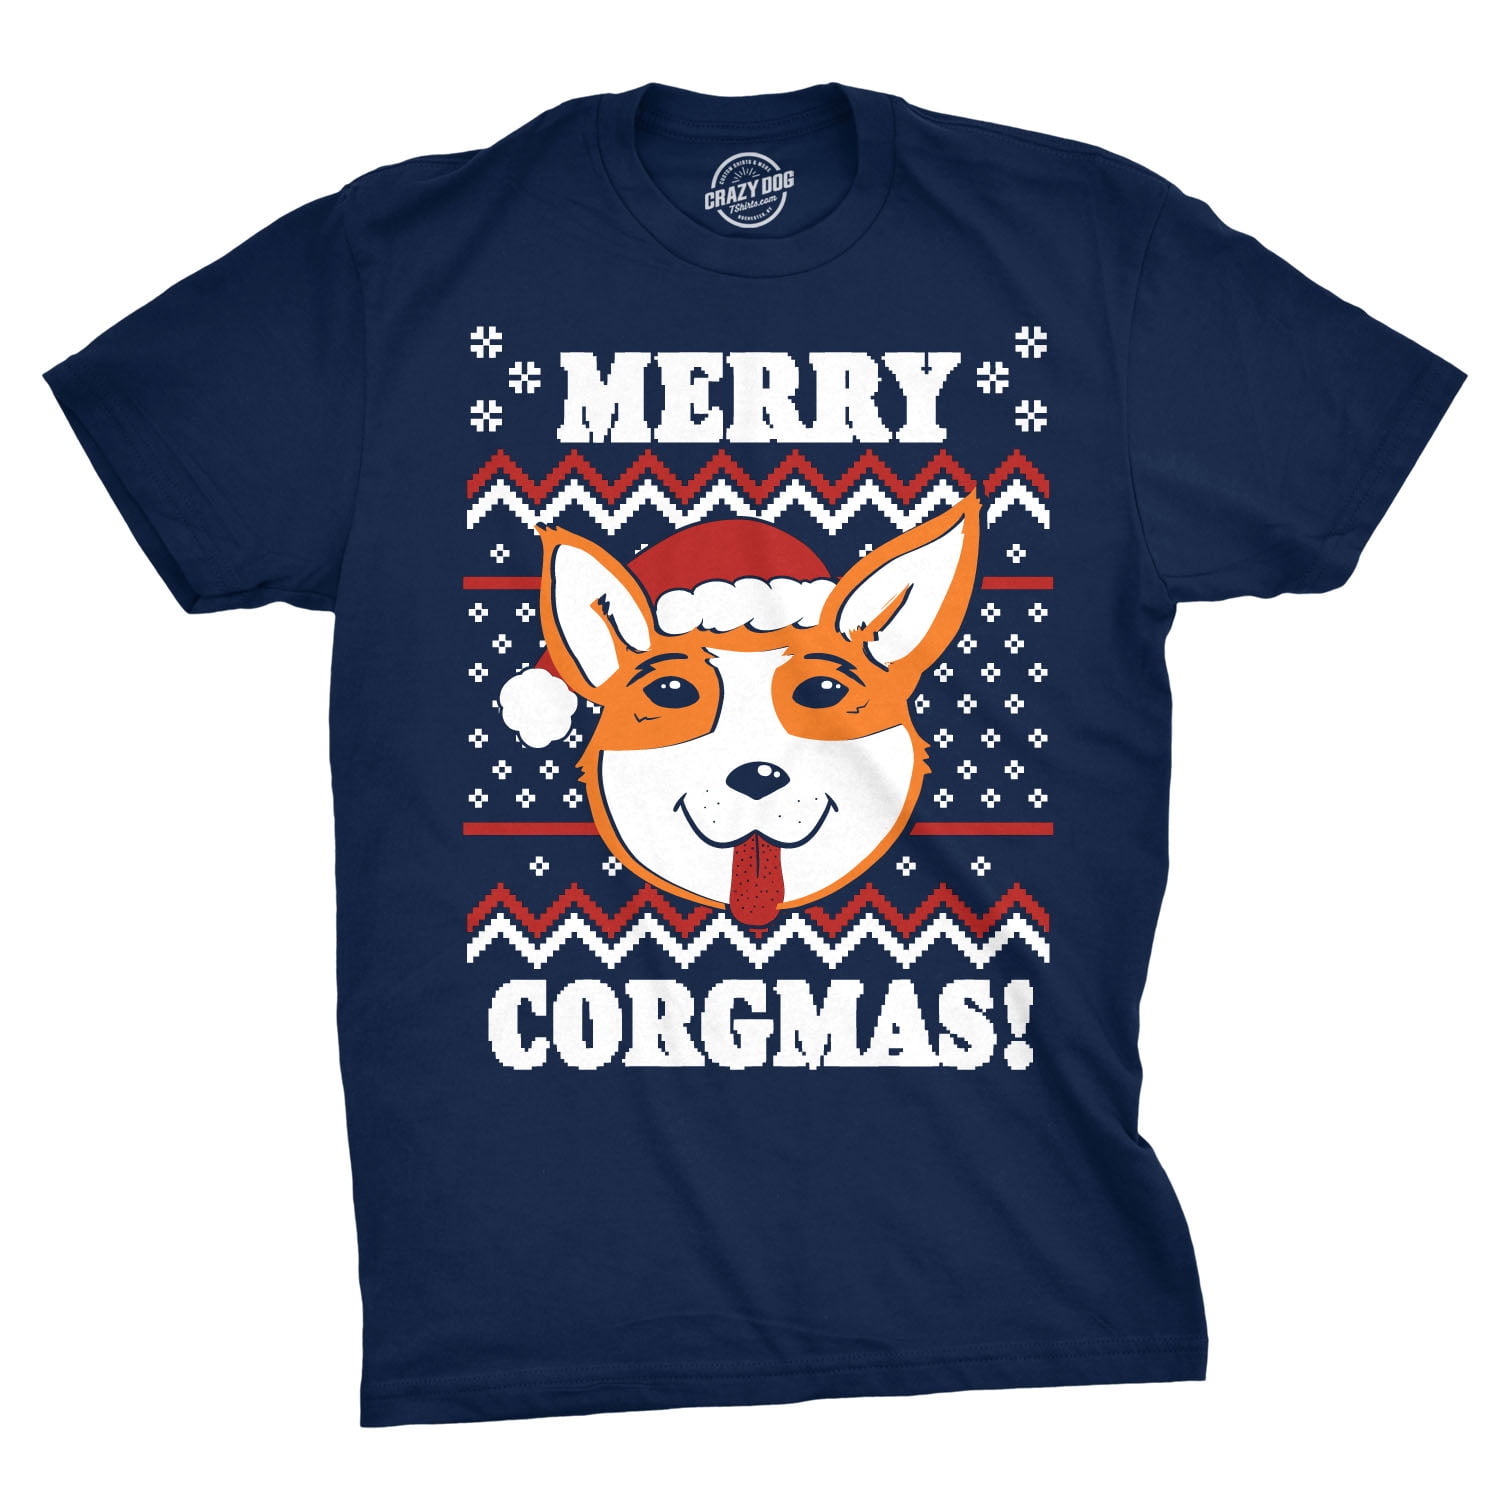 Merry Corgmas Shirt Christmas Shirts for Women Funny Corgi Dog Santa Tee Shirt 